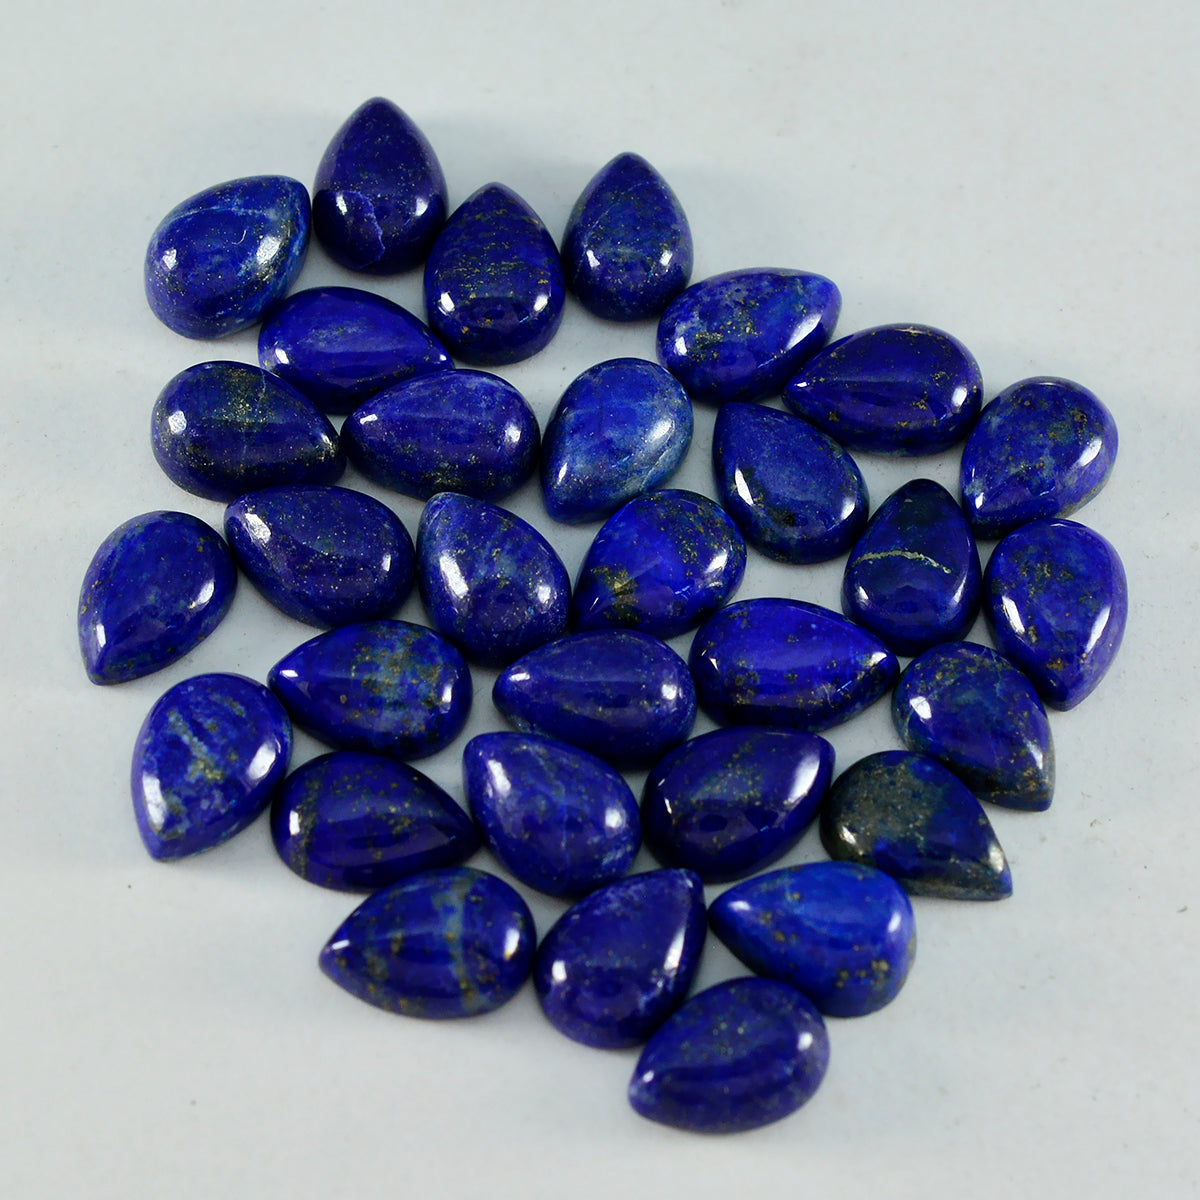 Riyogems 1PC Blue Lapis Lazuli Cabochon 5x7 mm Pear Shape A+1 Quality Loose Gem